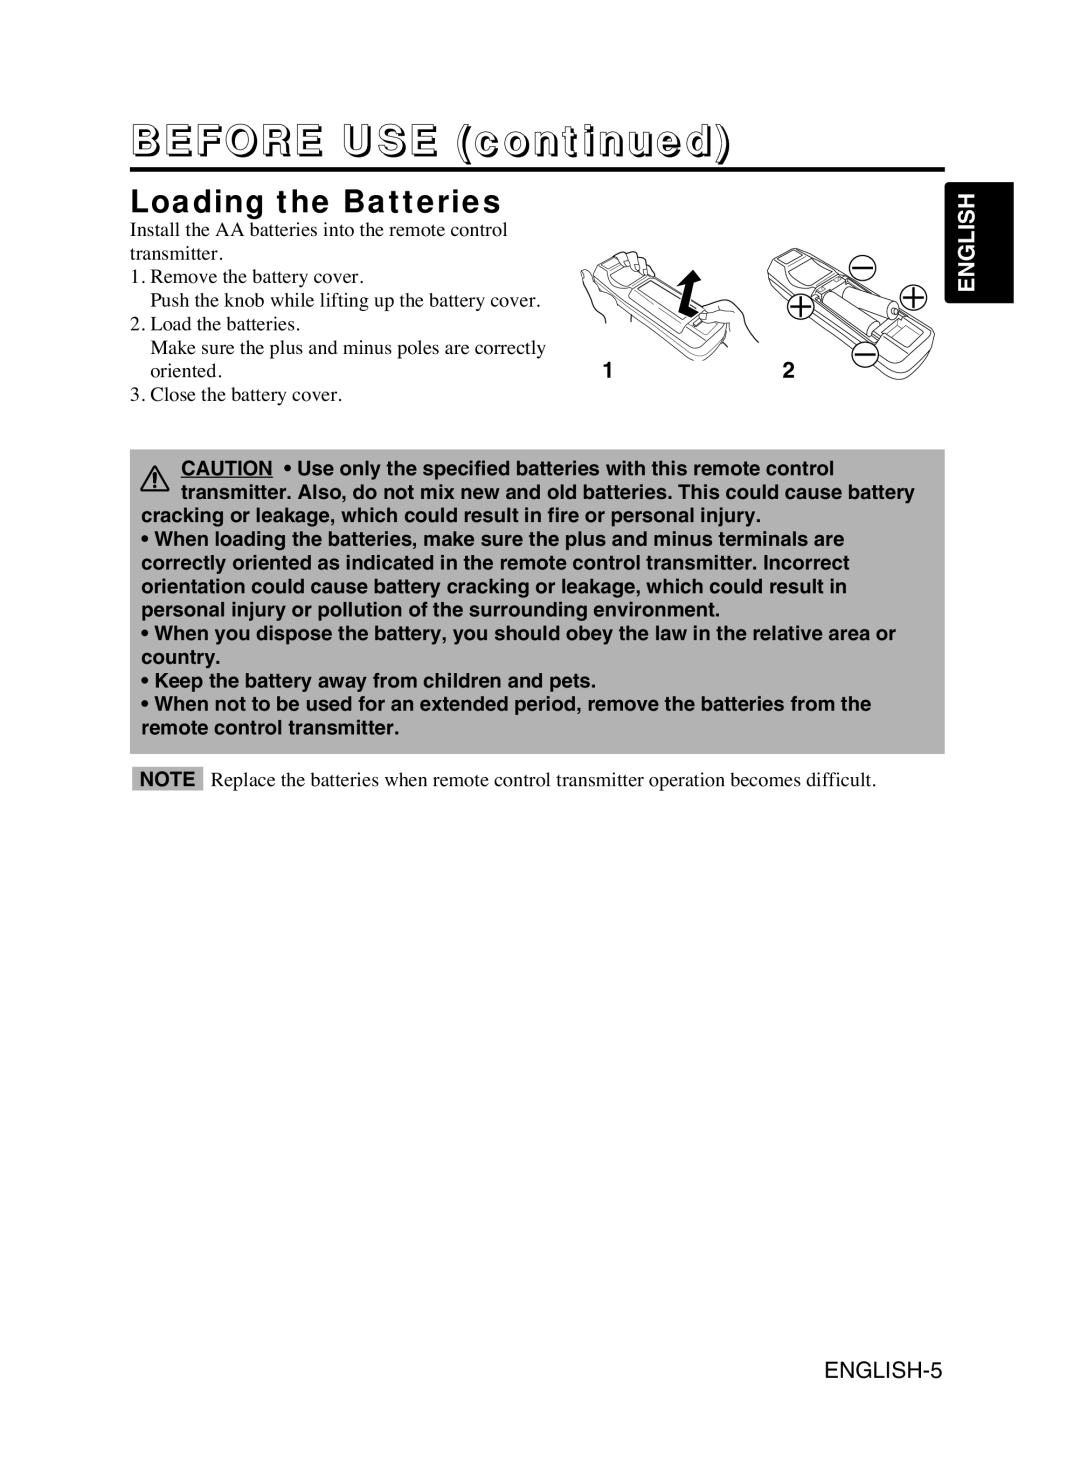 Proxima ASA DP6870 manual Loading the Batteries, BEFORE USE continued, English, ENGLISH-5 